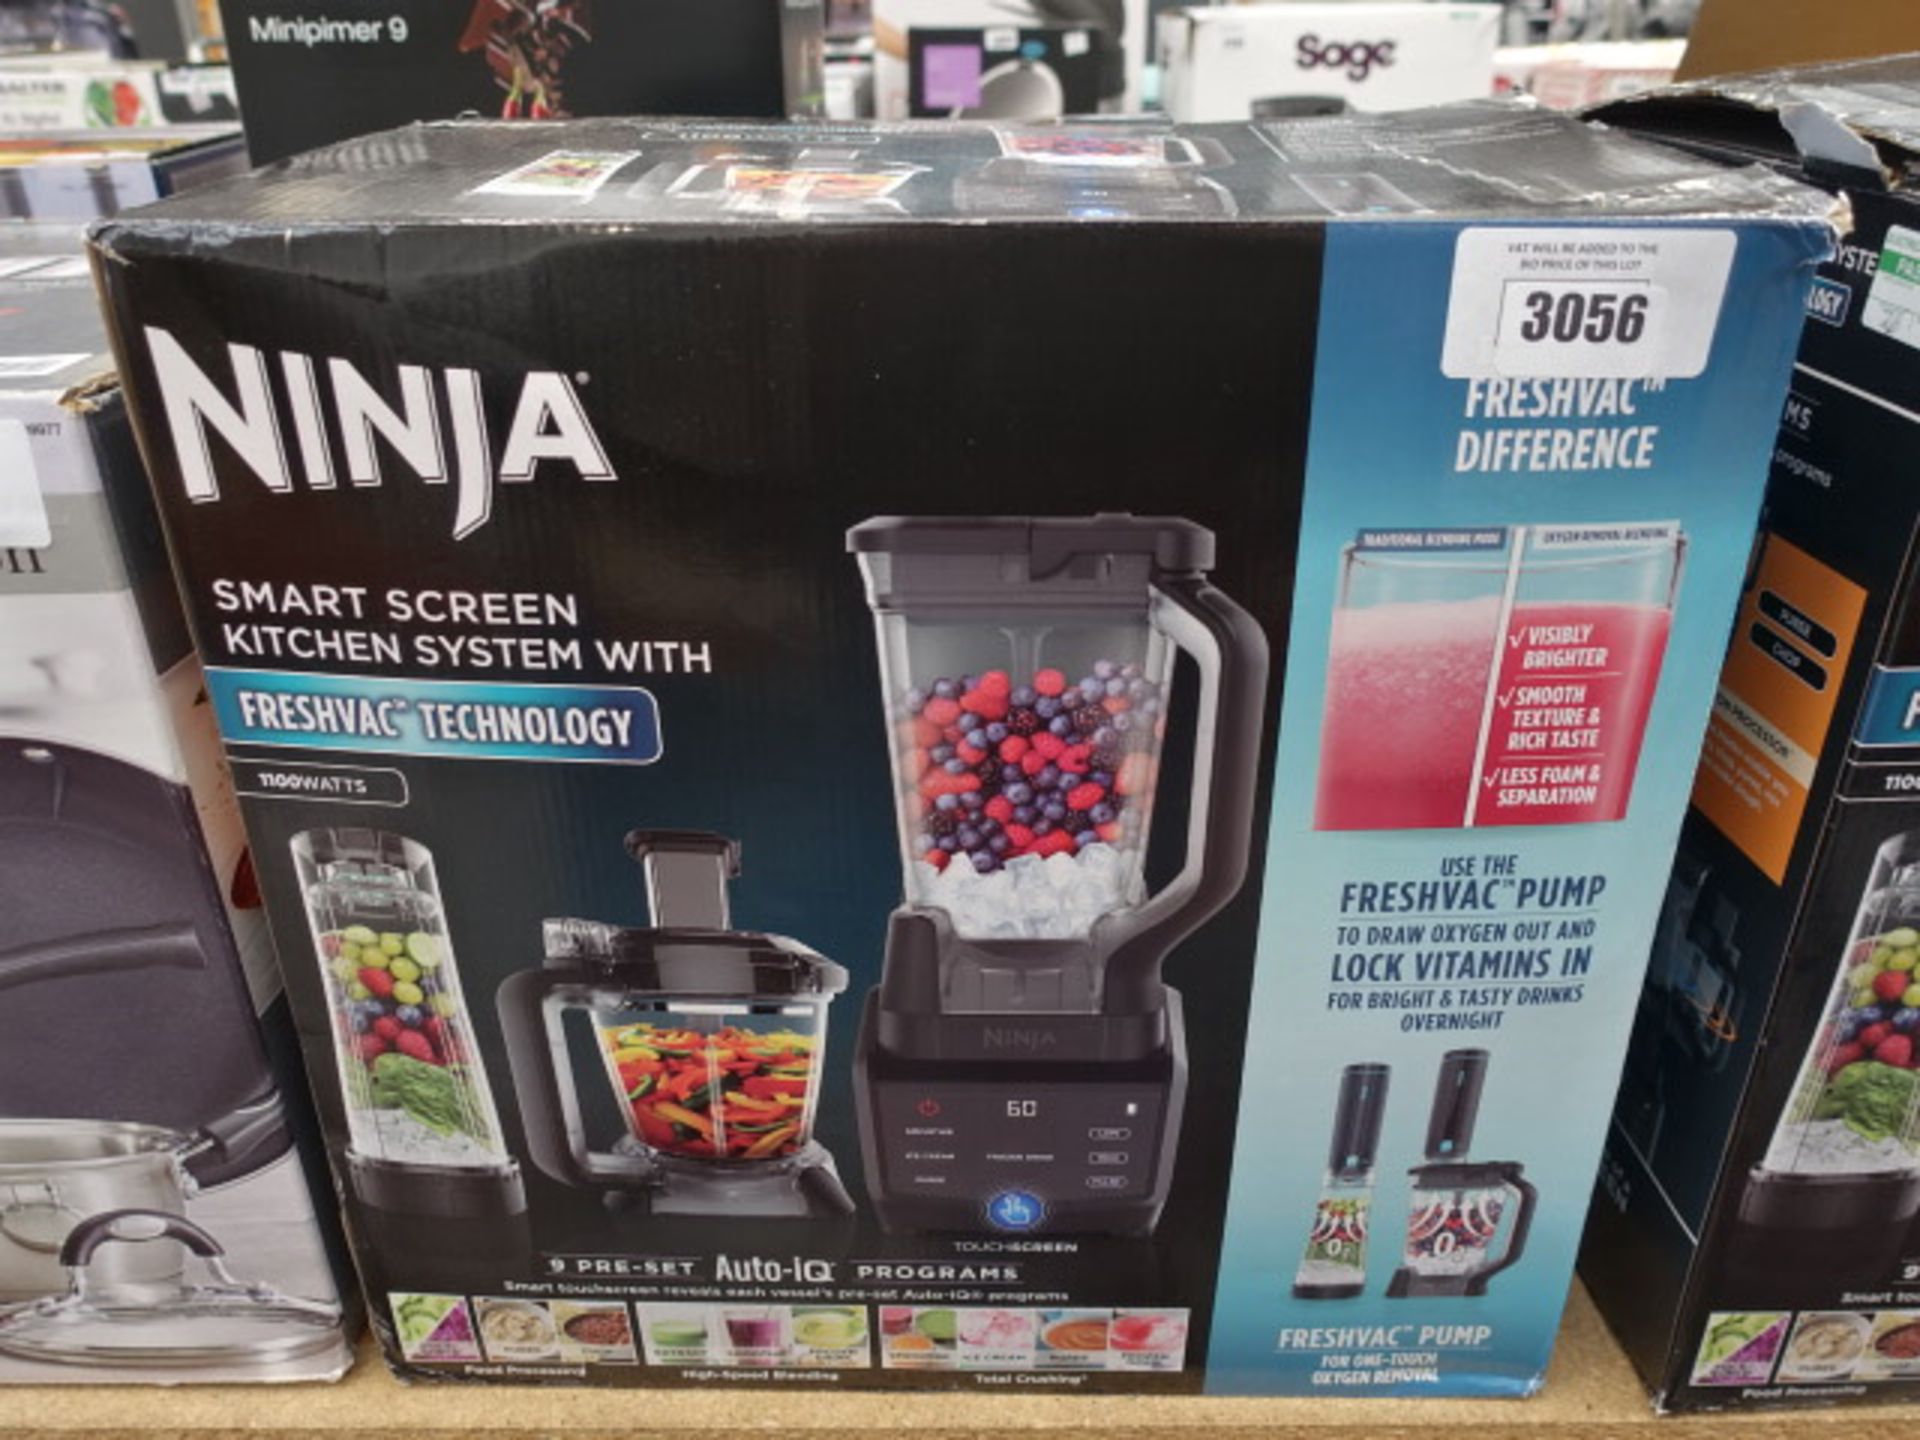 Boxed Ninja Smart Screen kitchen system